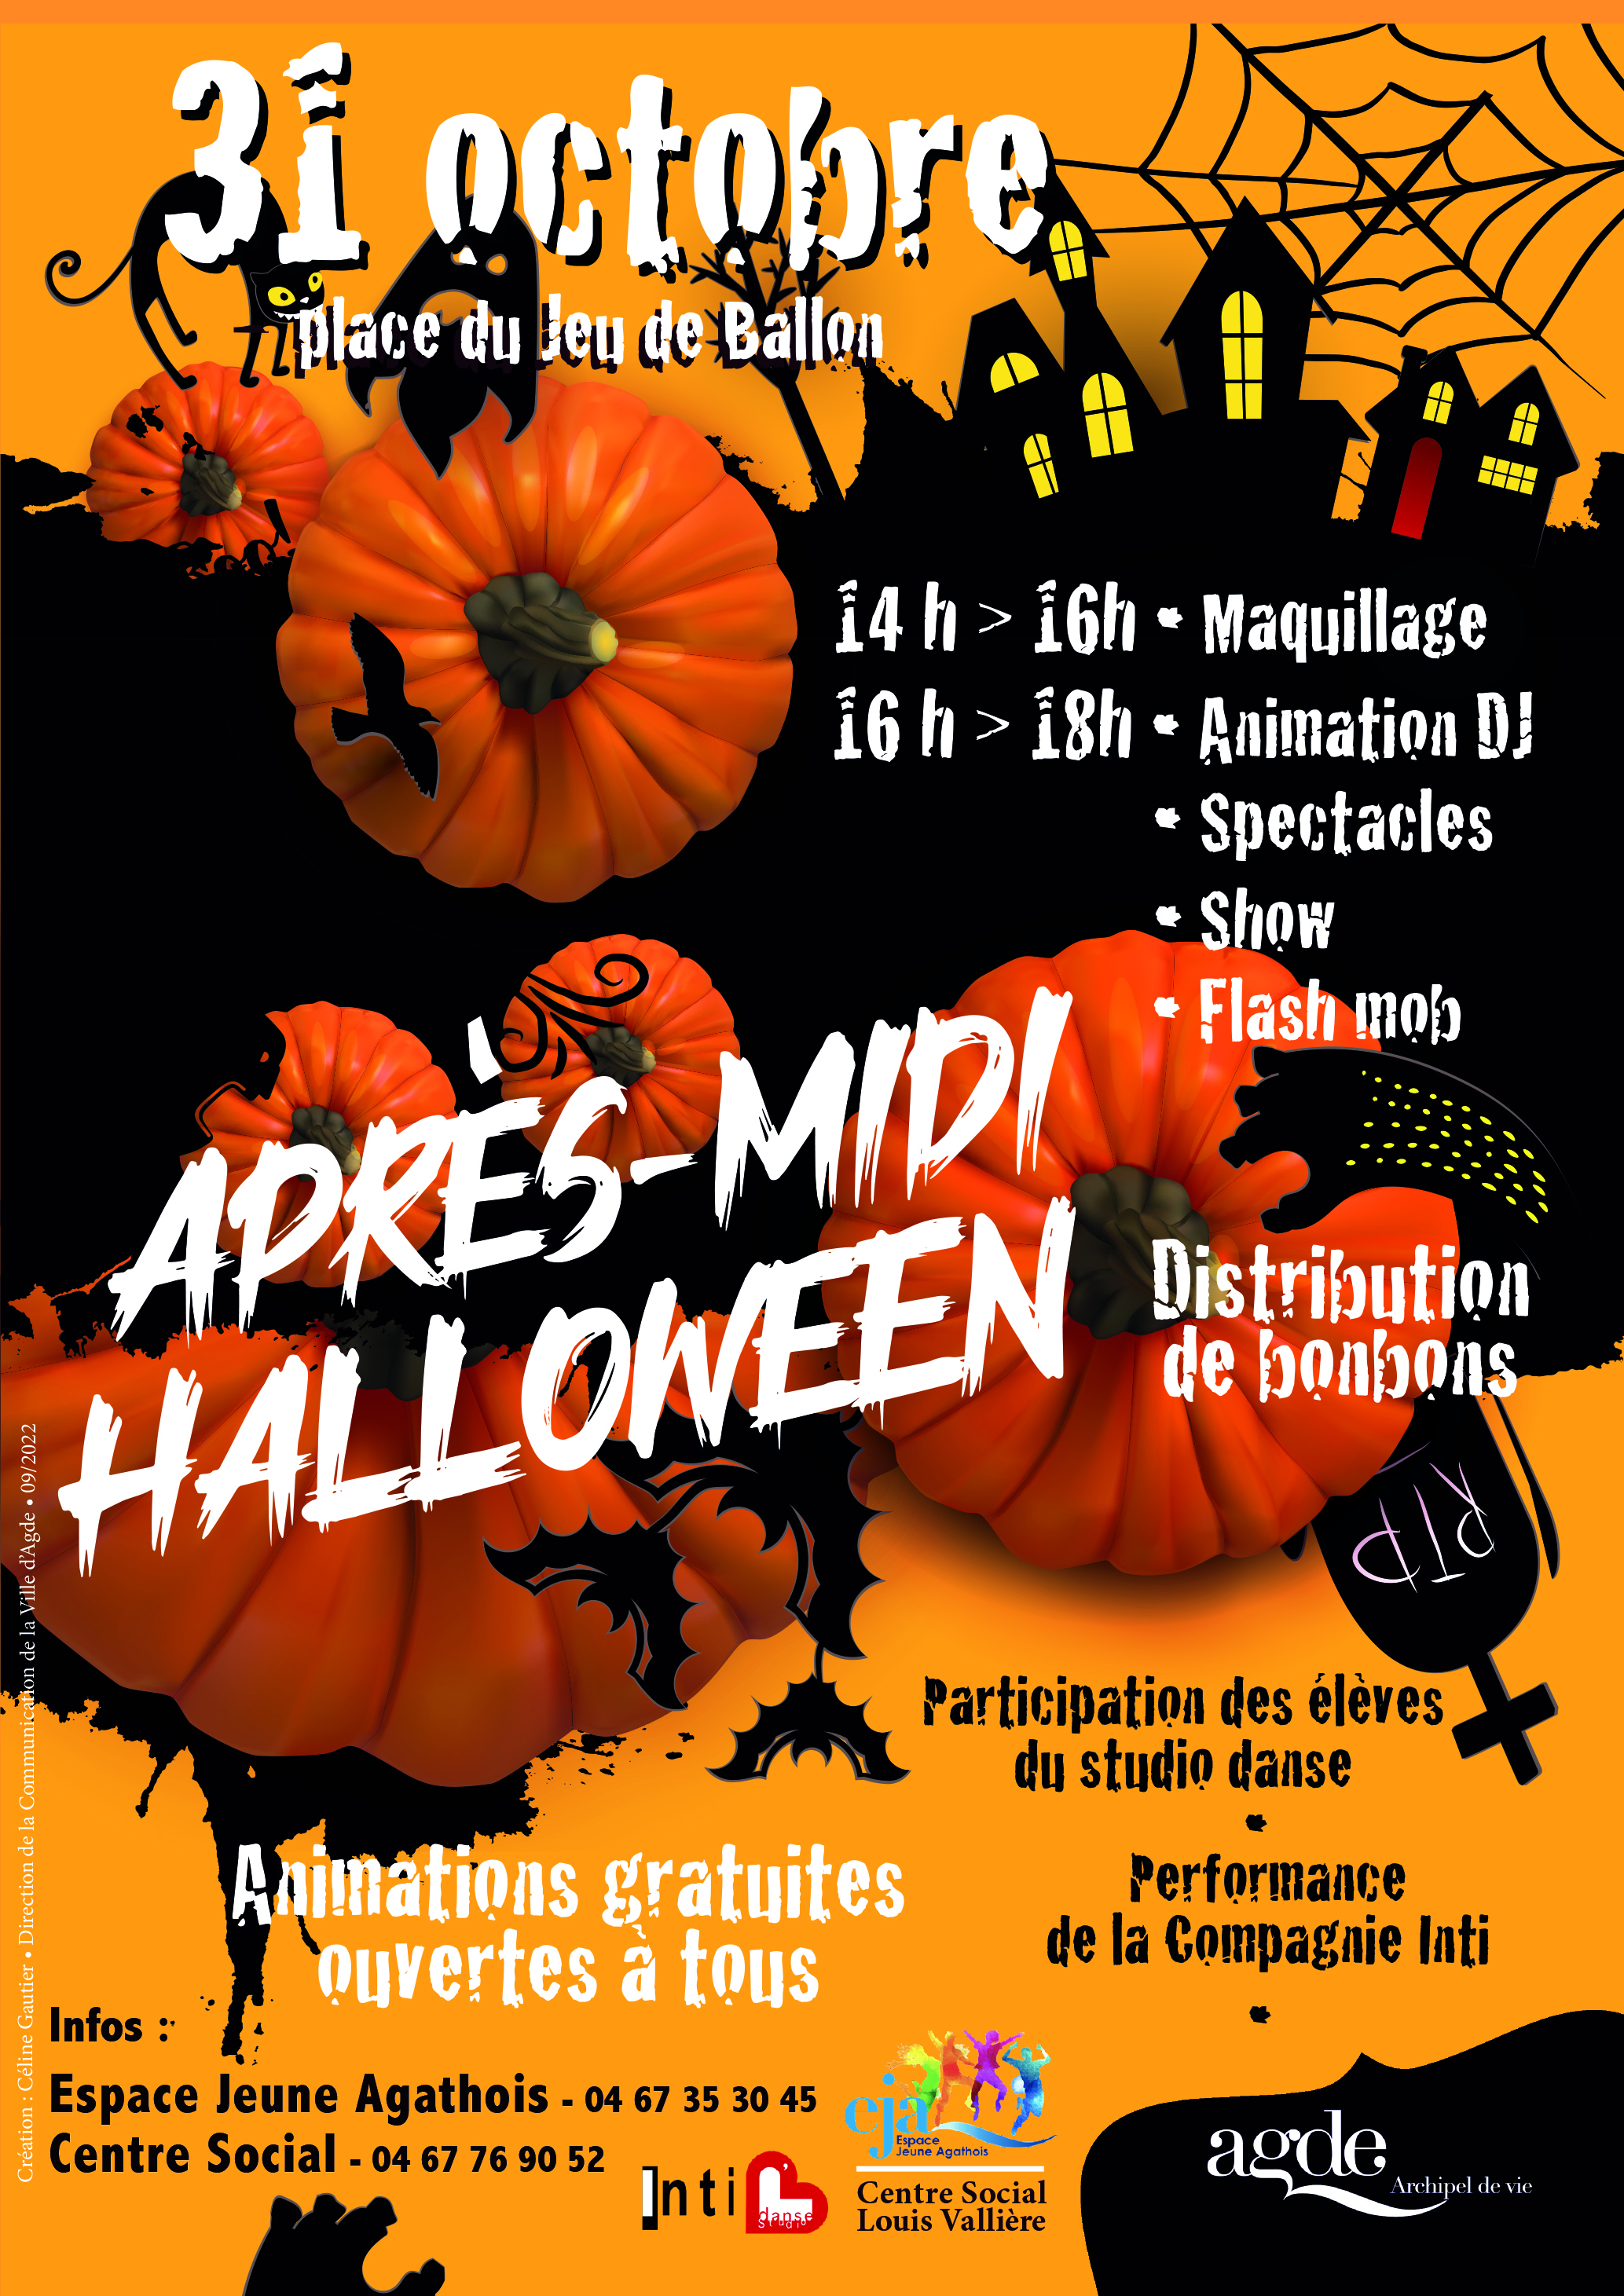 Agde - Après-midi Halloween 31 octobre 2022 Place du jeu ballon à Agde